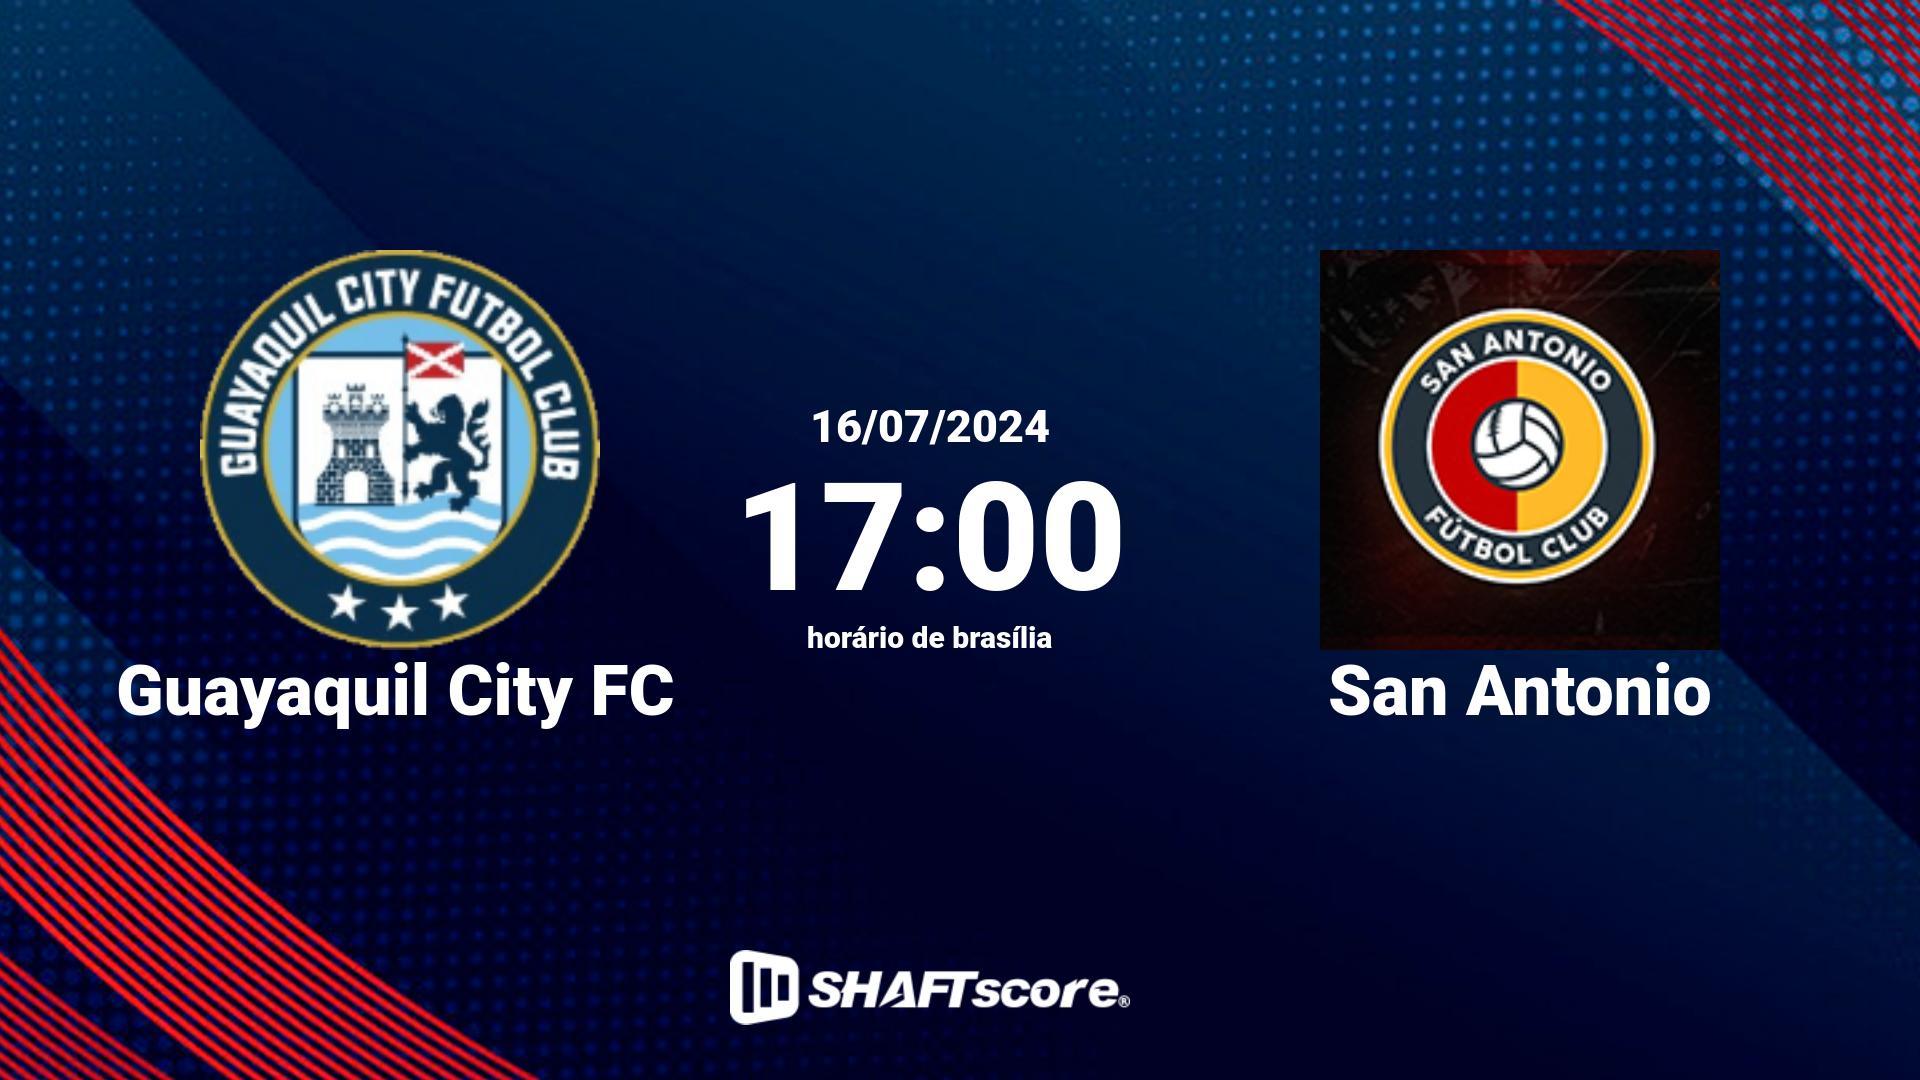 Estatísticas do jogo Guayaquil City FC vs San Antonio 16.07 17:00